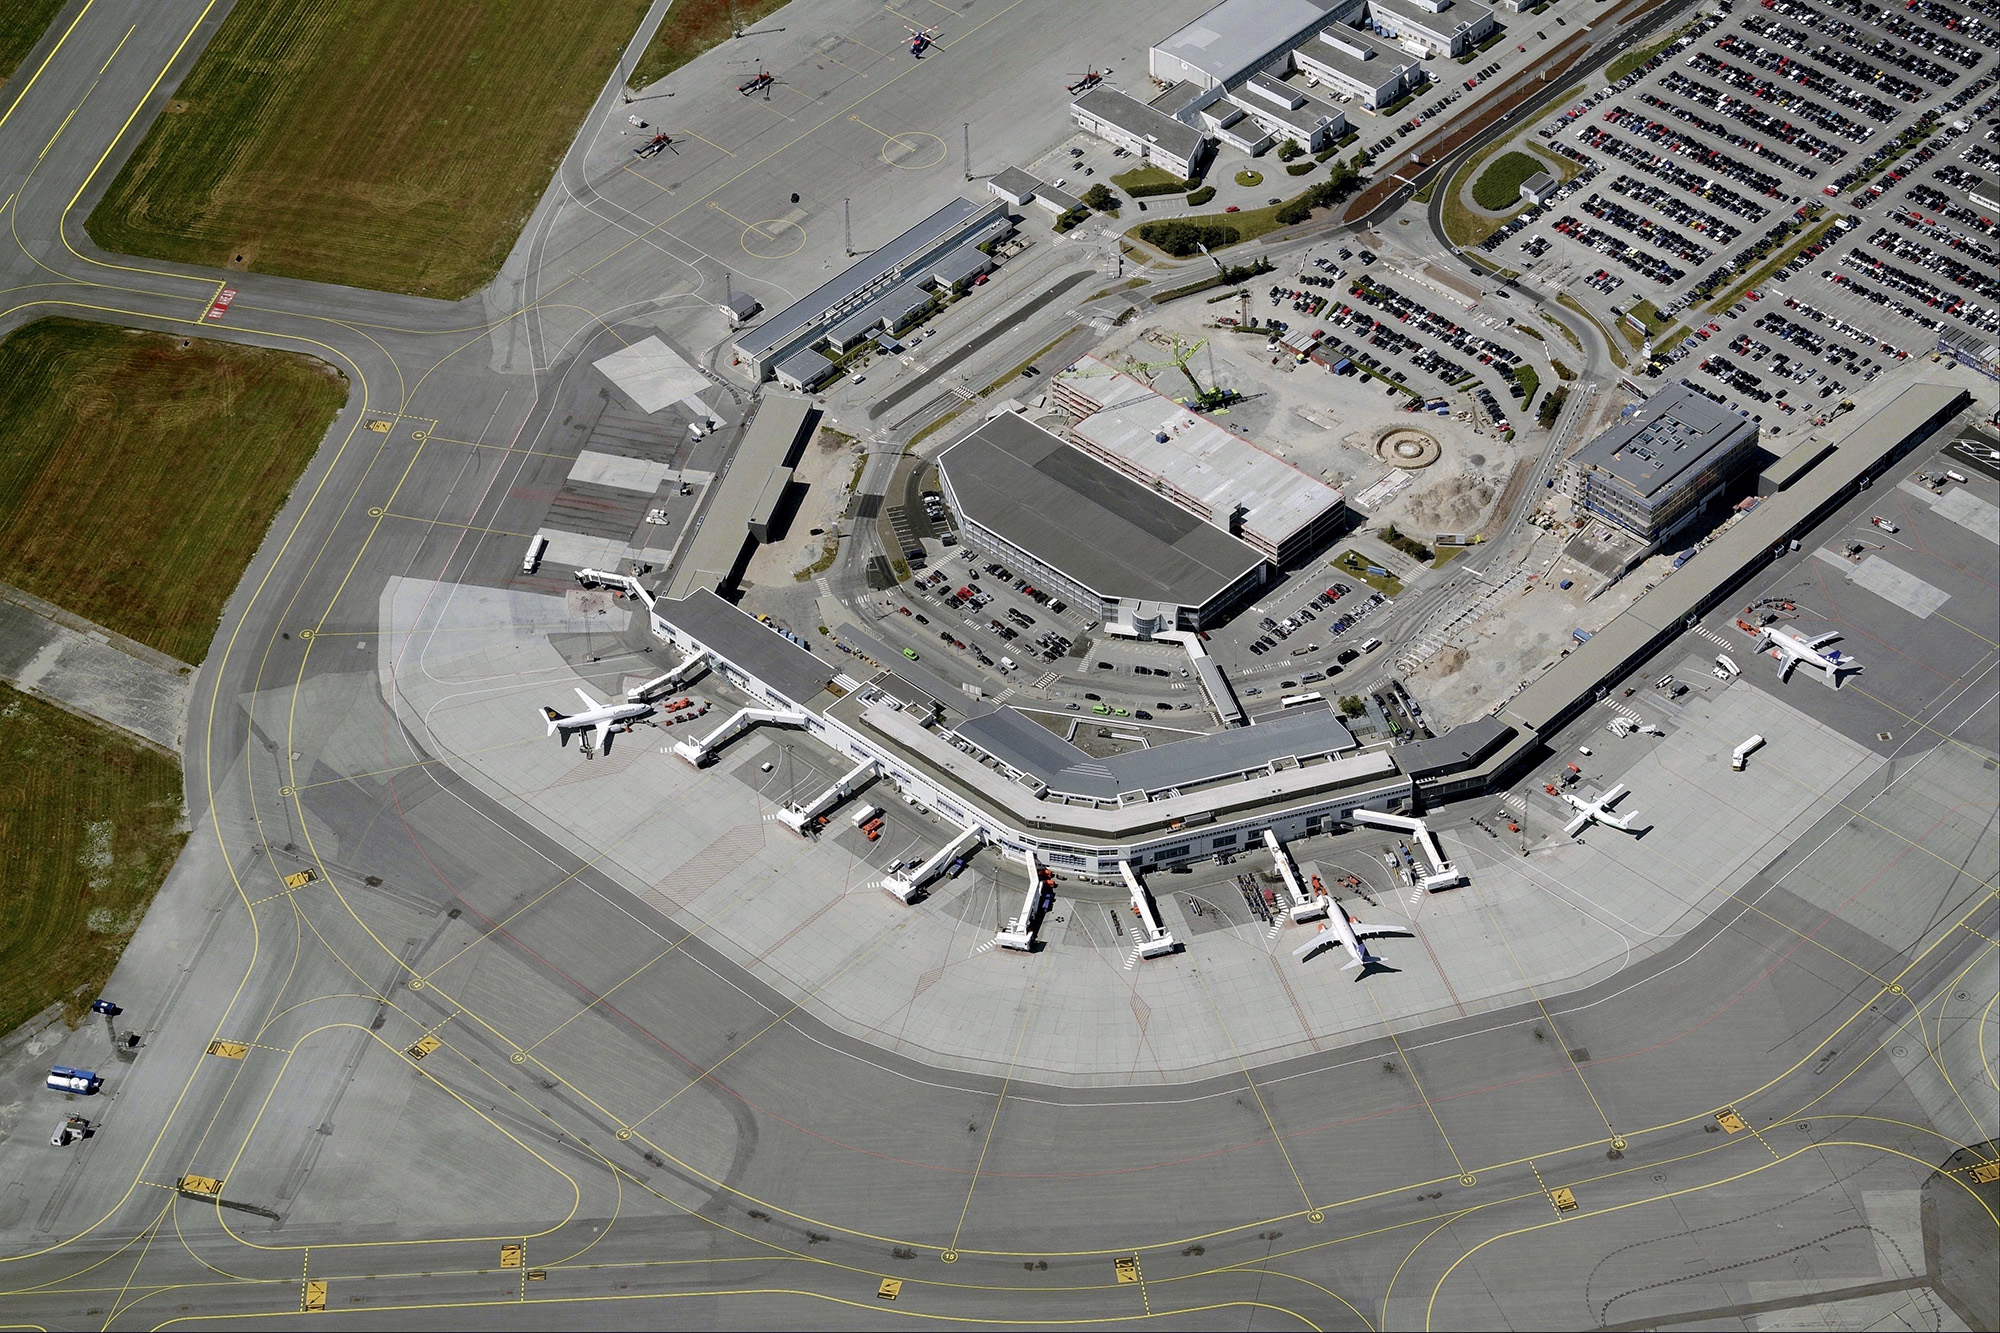 Stavanger airport